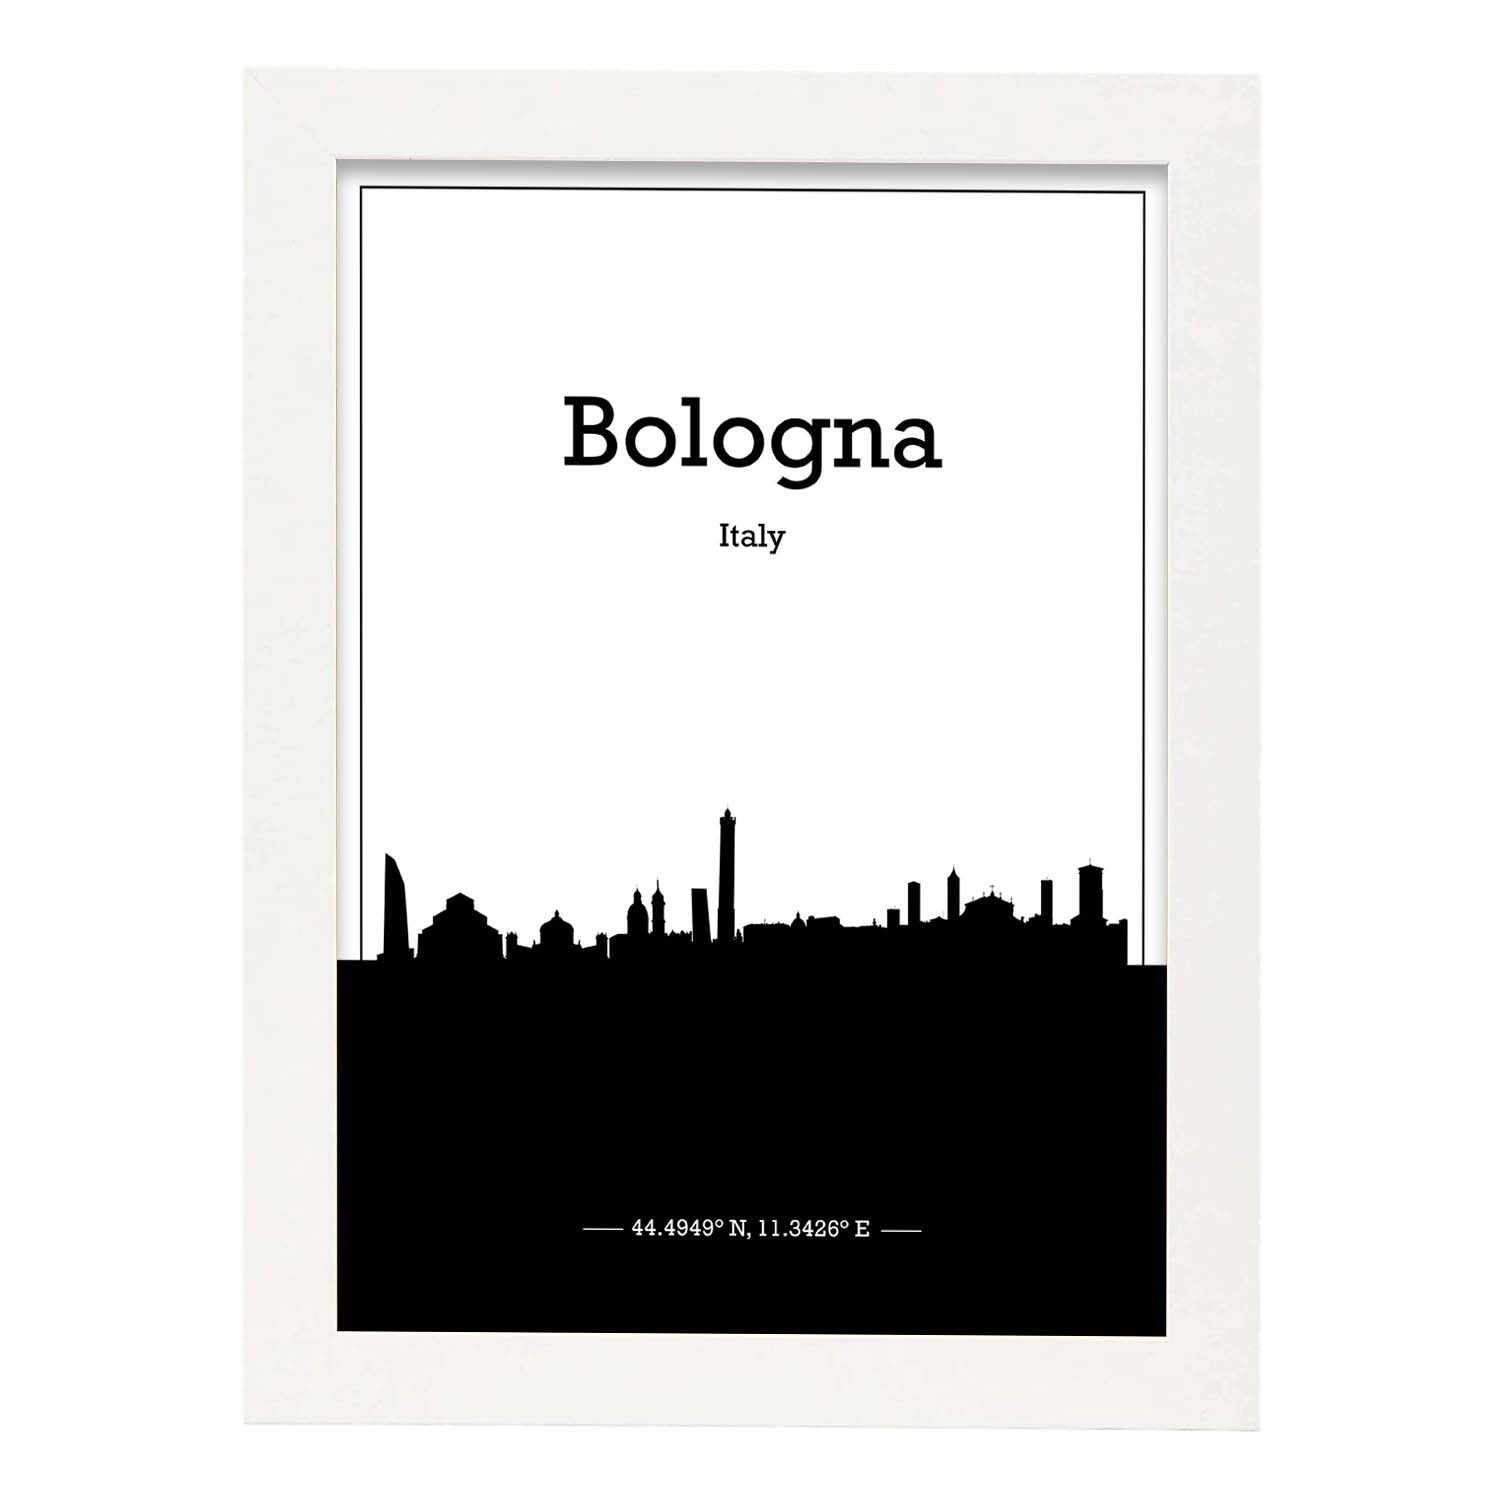 Poster con mapa de Bologna - Italia. Láminas con Skyline de ciudades de Italia con sombra negra.-Artwork-Nacnic-A4-Marco Blanco-Nacnic Estudio SL